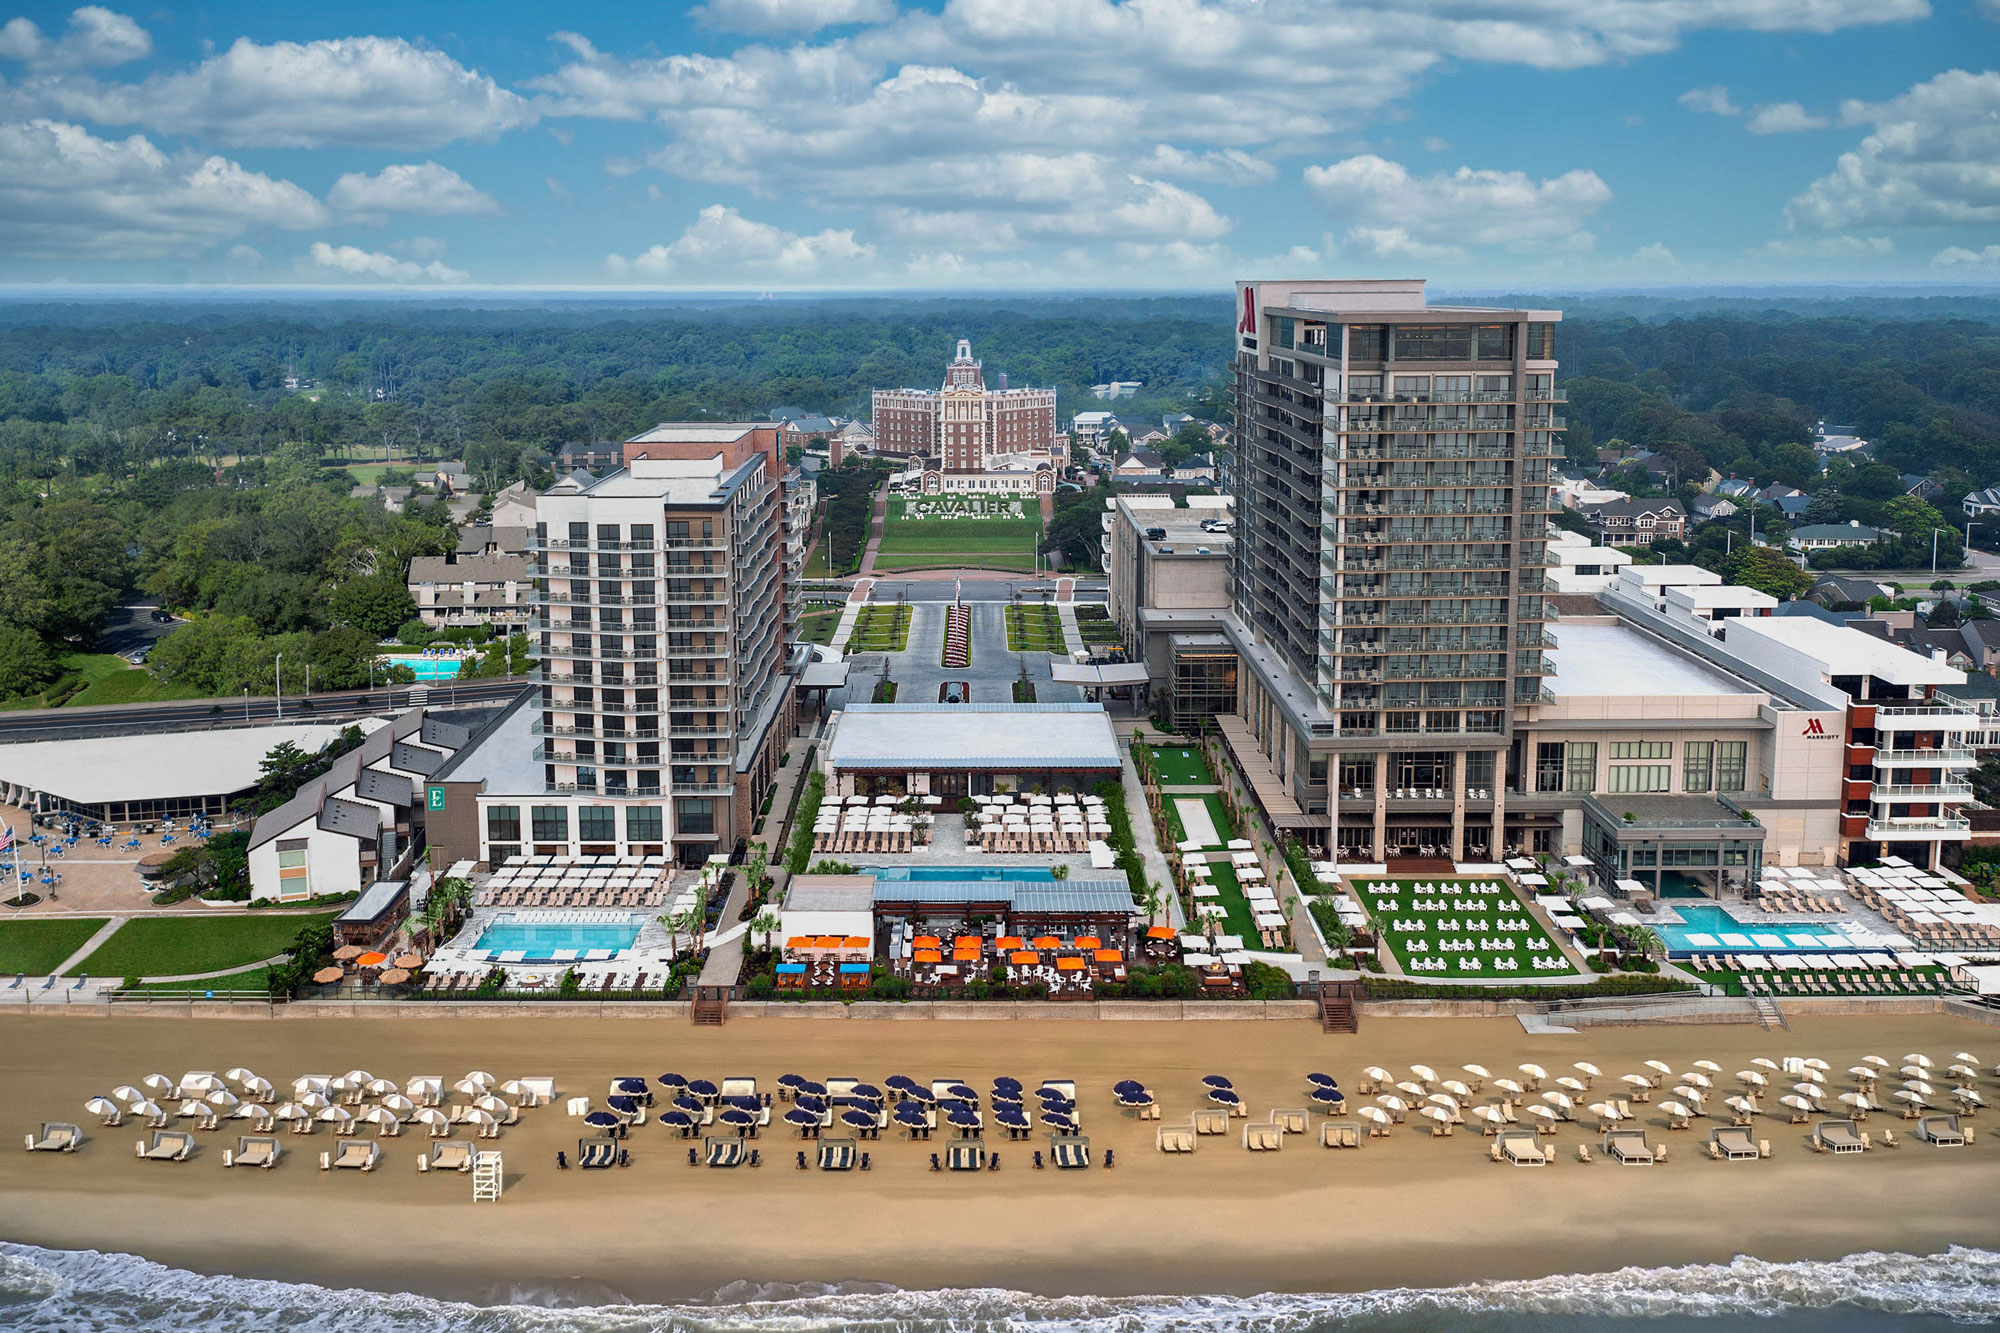 Panorama of all the Cavalier Resort properties